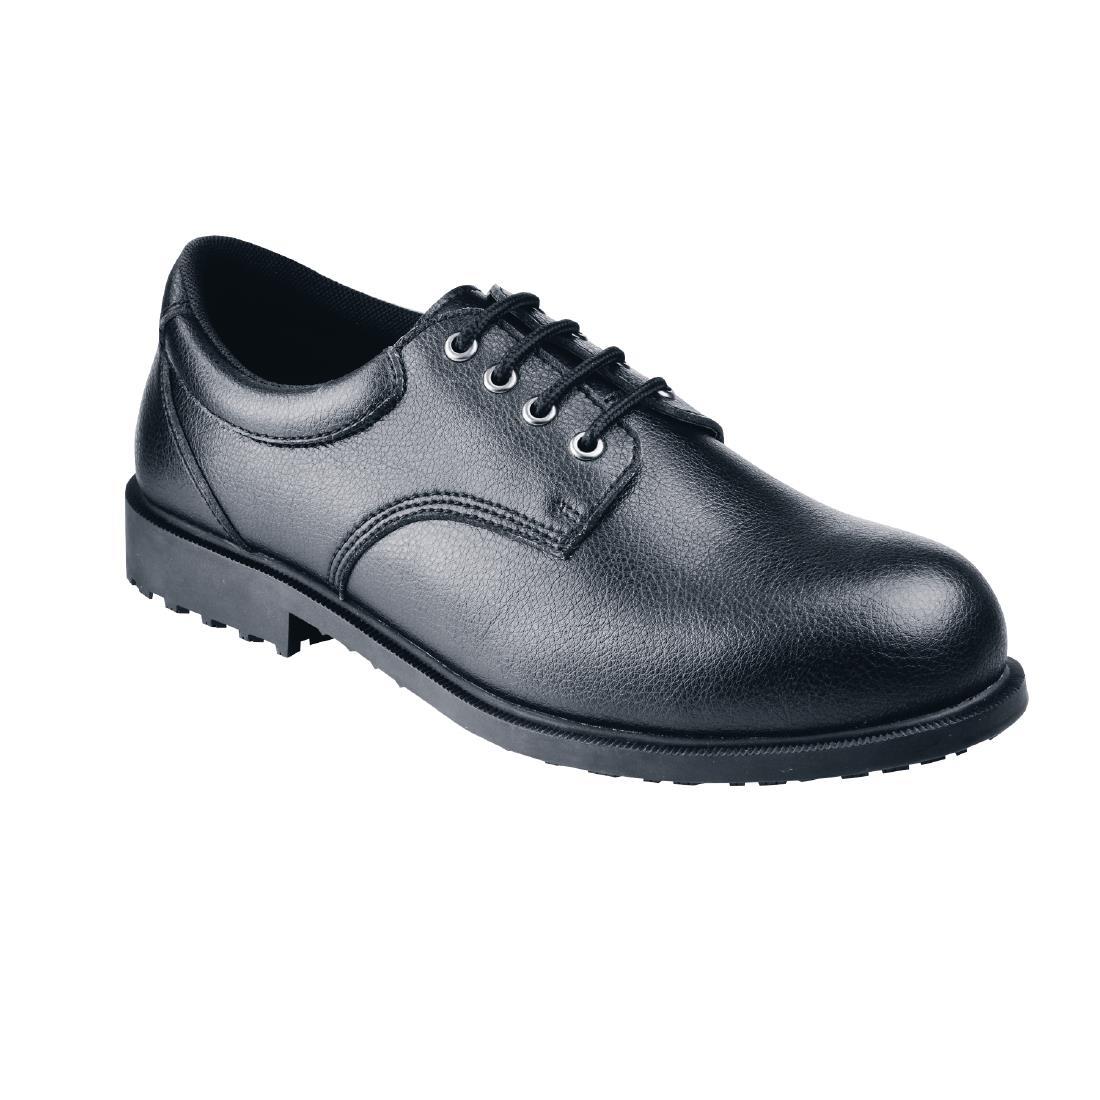 Shoes for Crews Cambridge Steel Toe Dress Shoe Size 43 - BB611-43  - 1